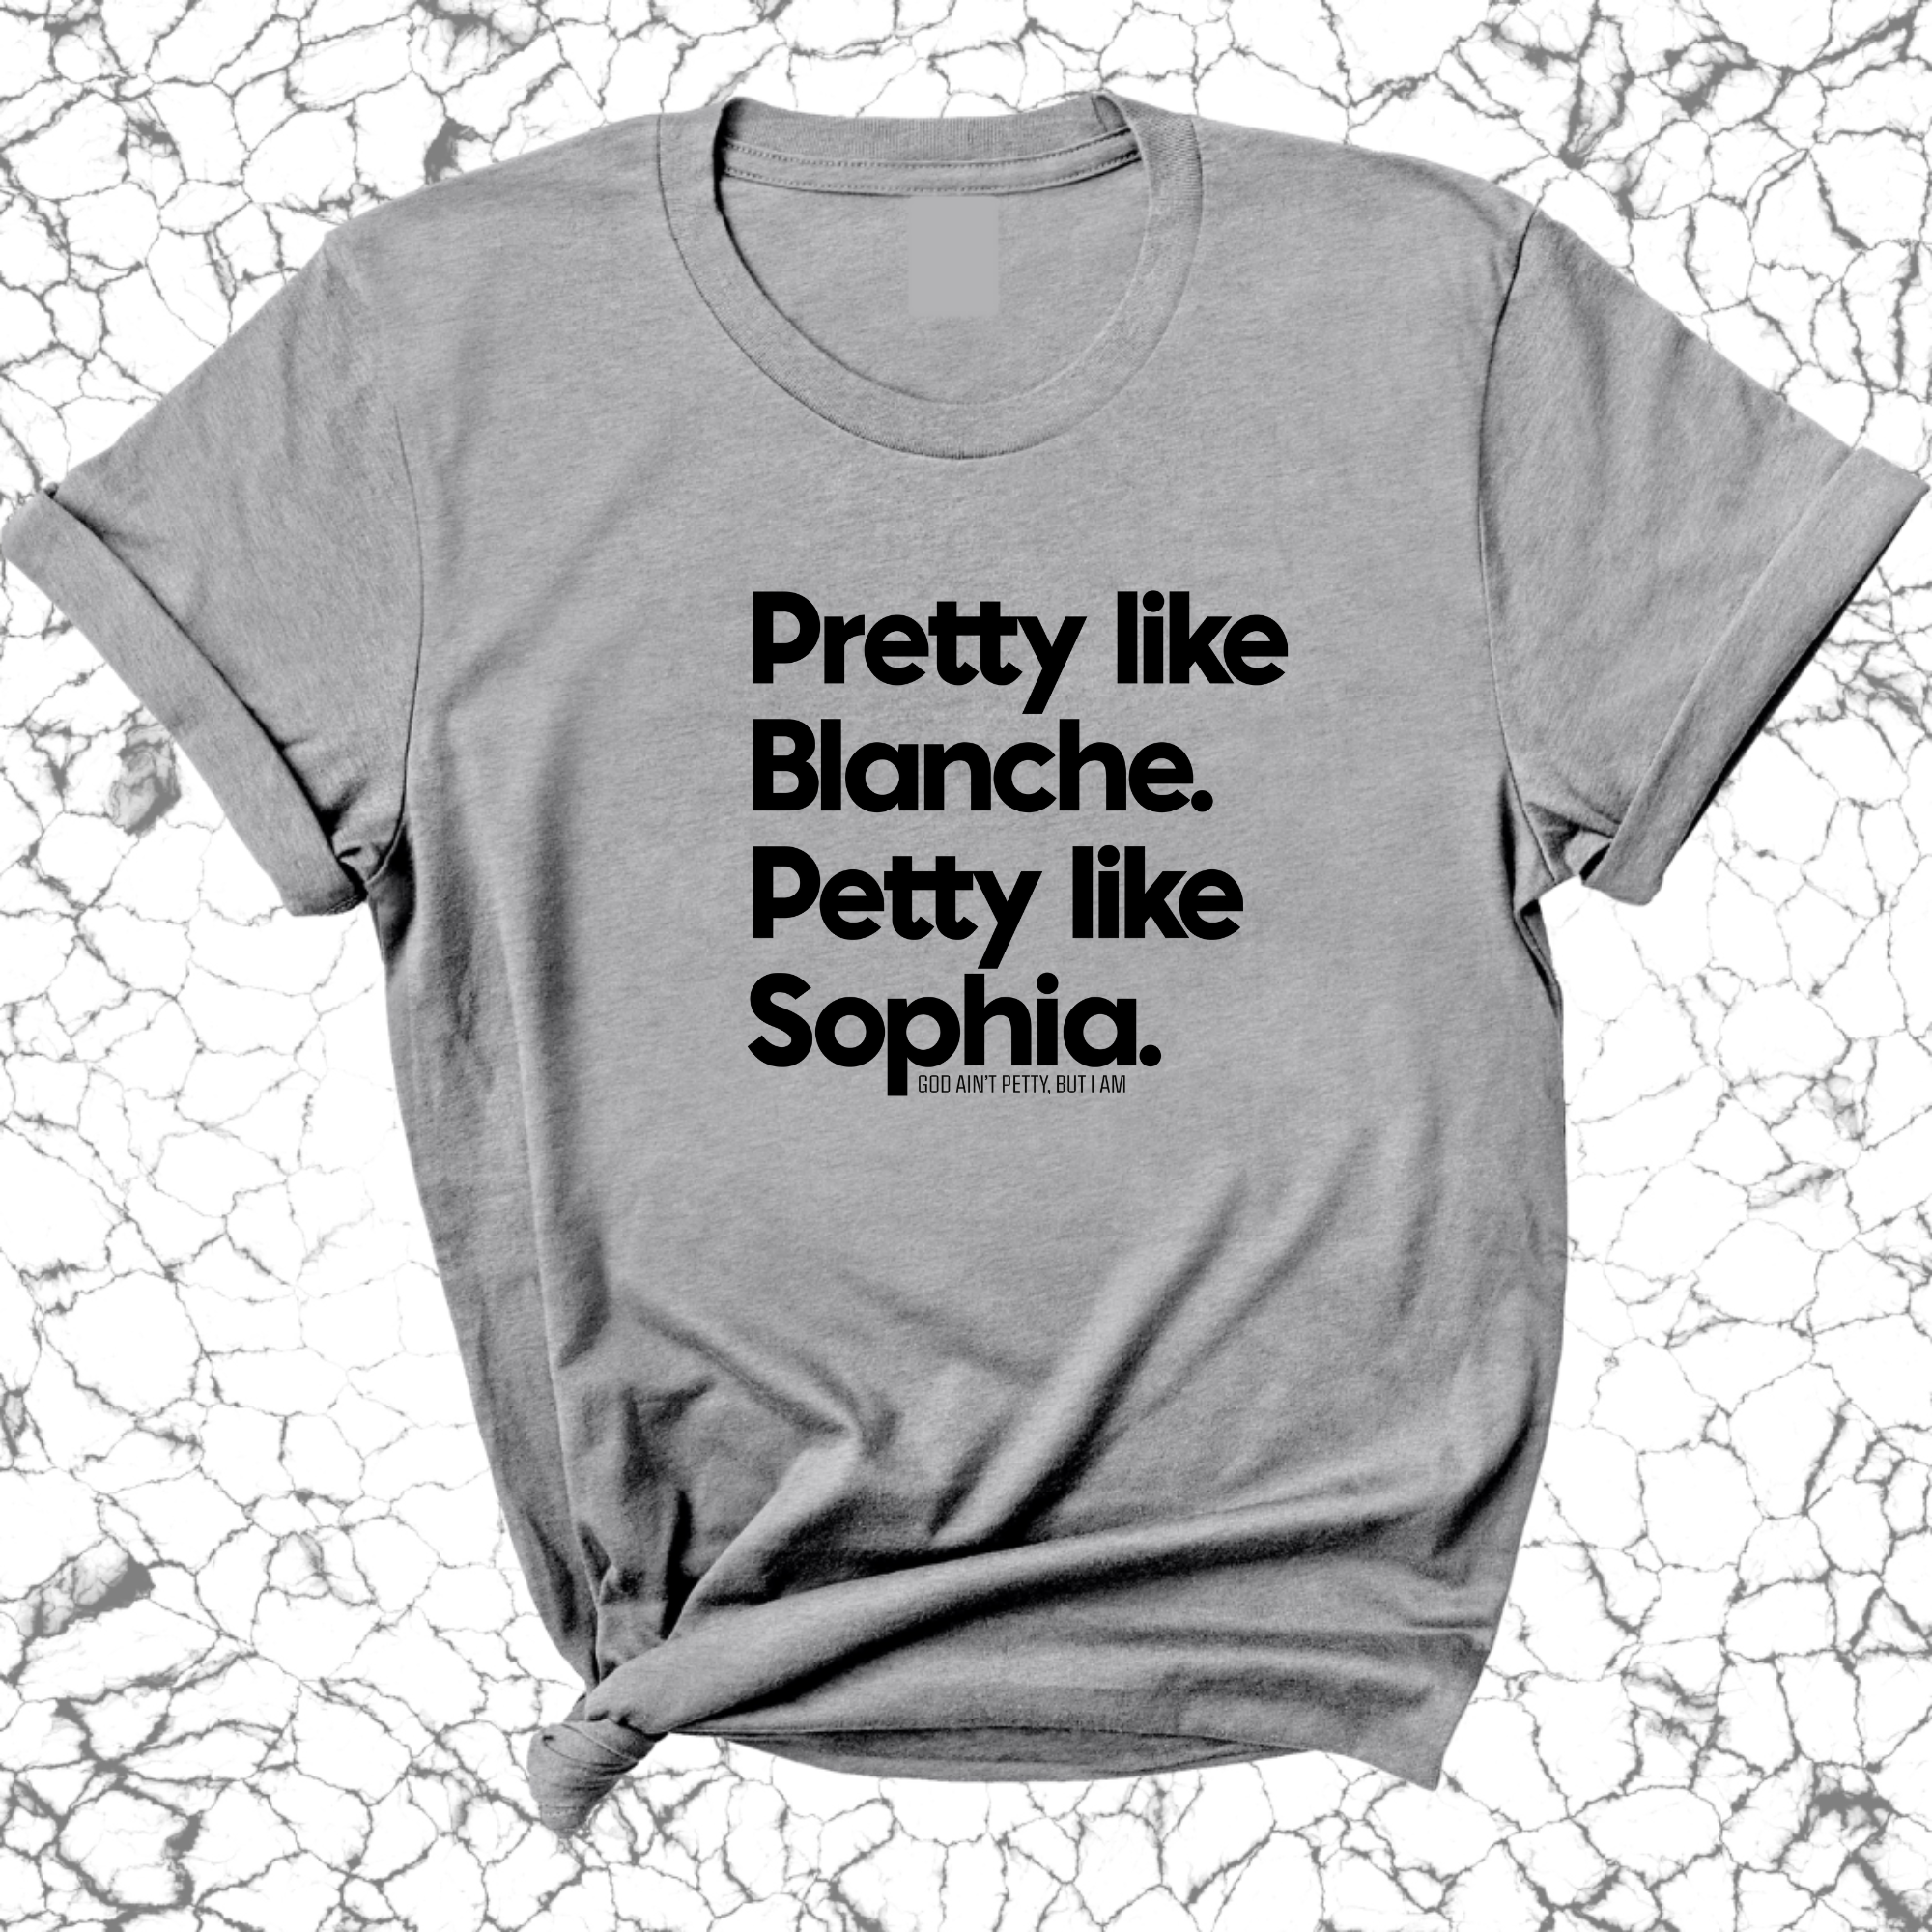 Pretty like Blanche Petty like Sophia Unisex Tee-T-Shirt-The Original God Ain't Petty But I Am